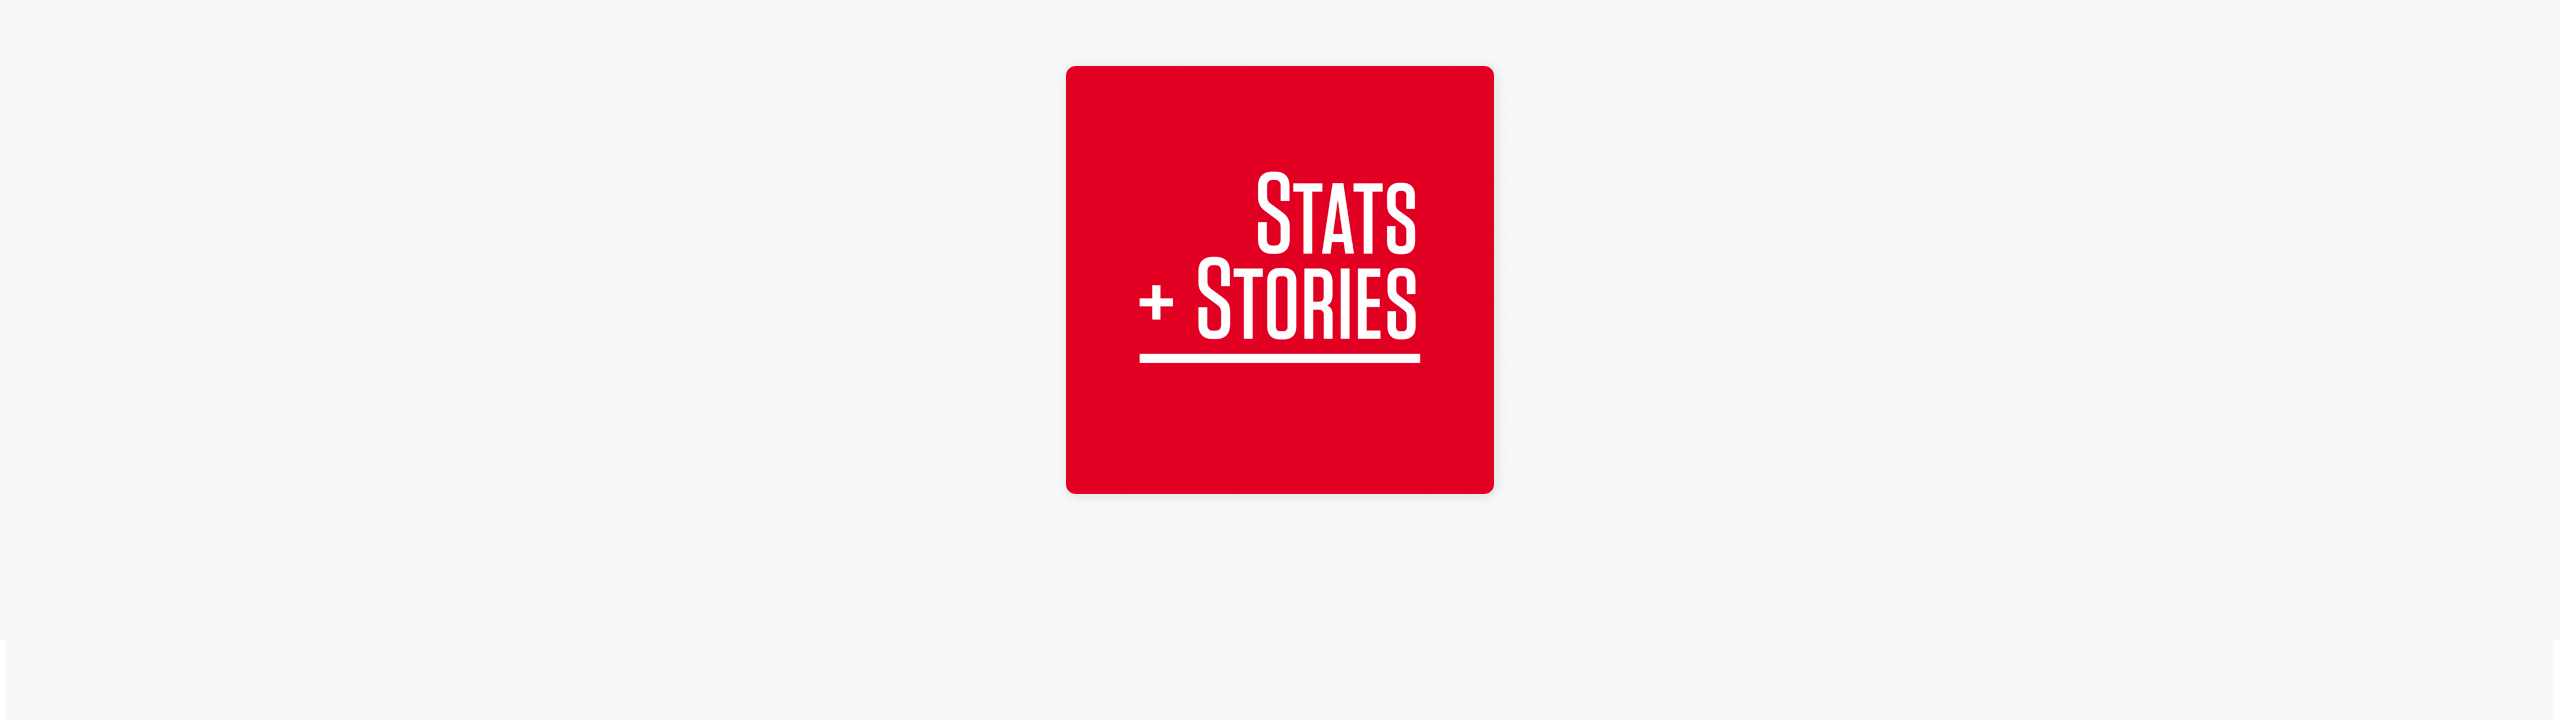 stats+stories